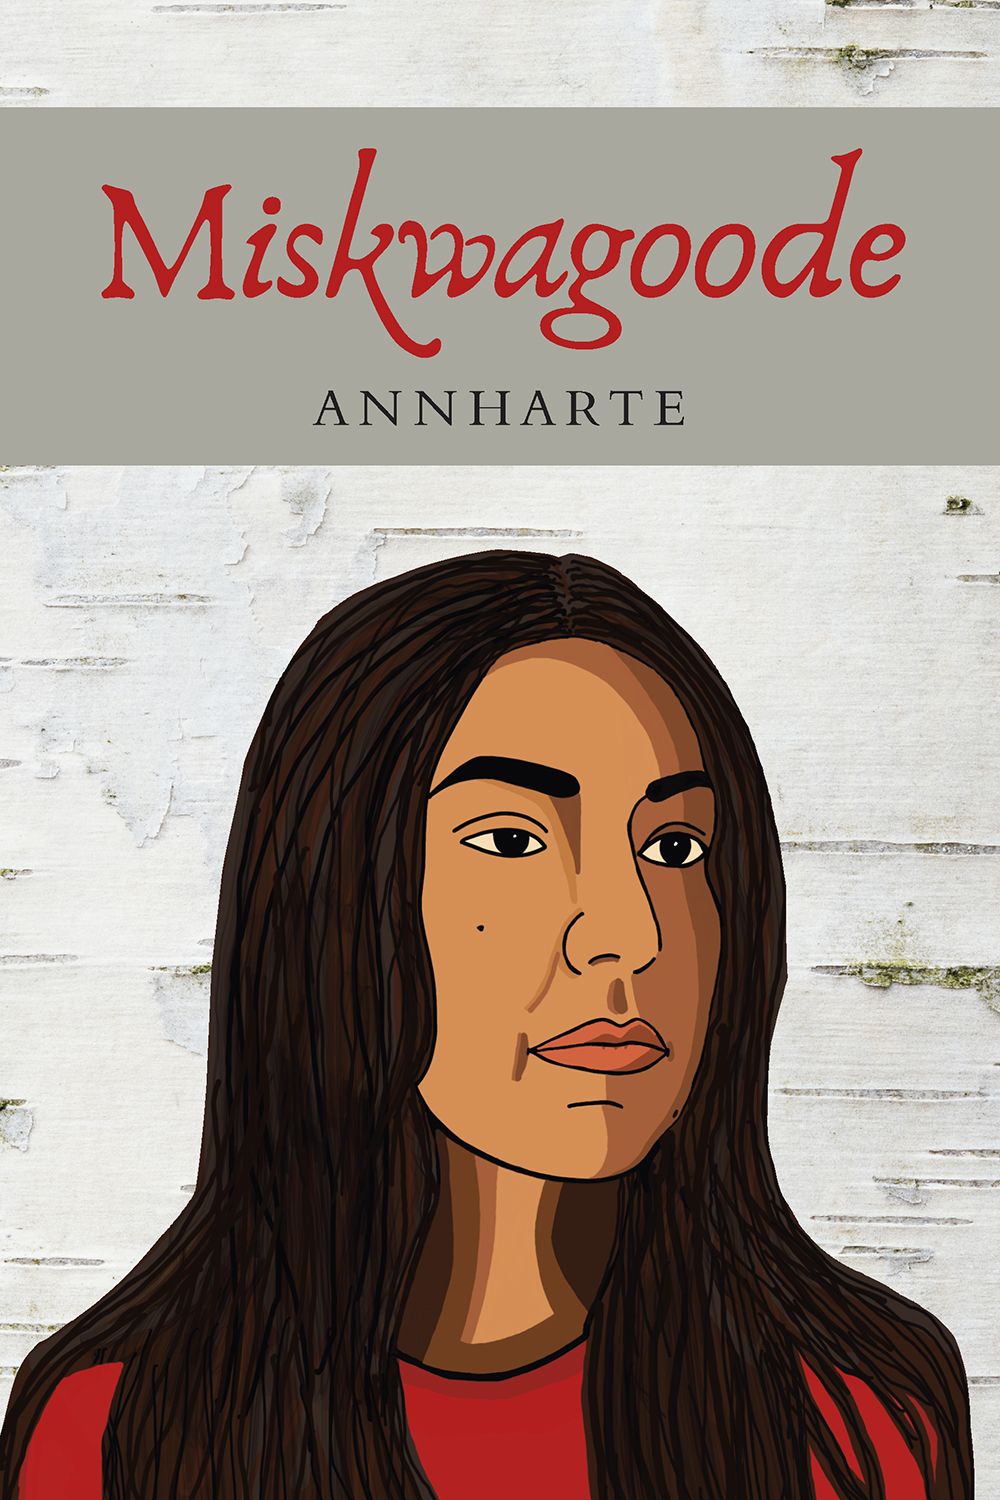 Miskwagoode by Marie Annharte Baker